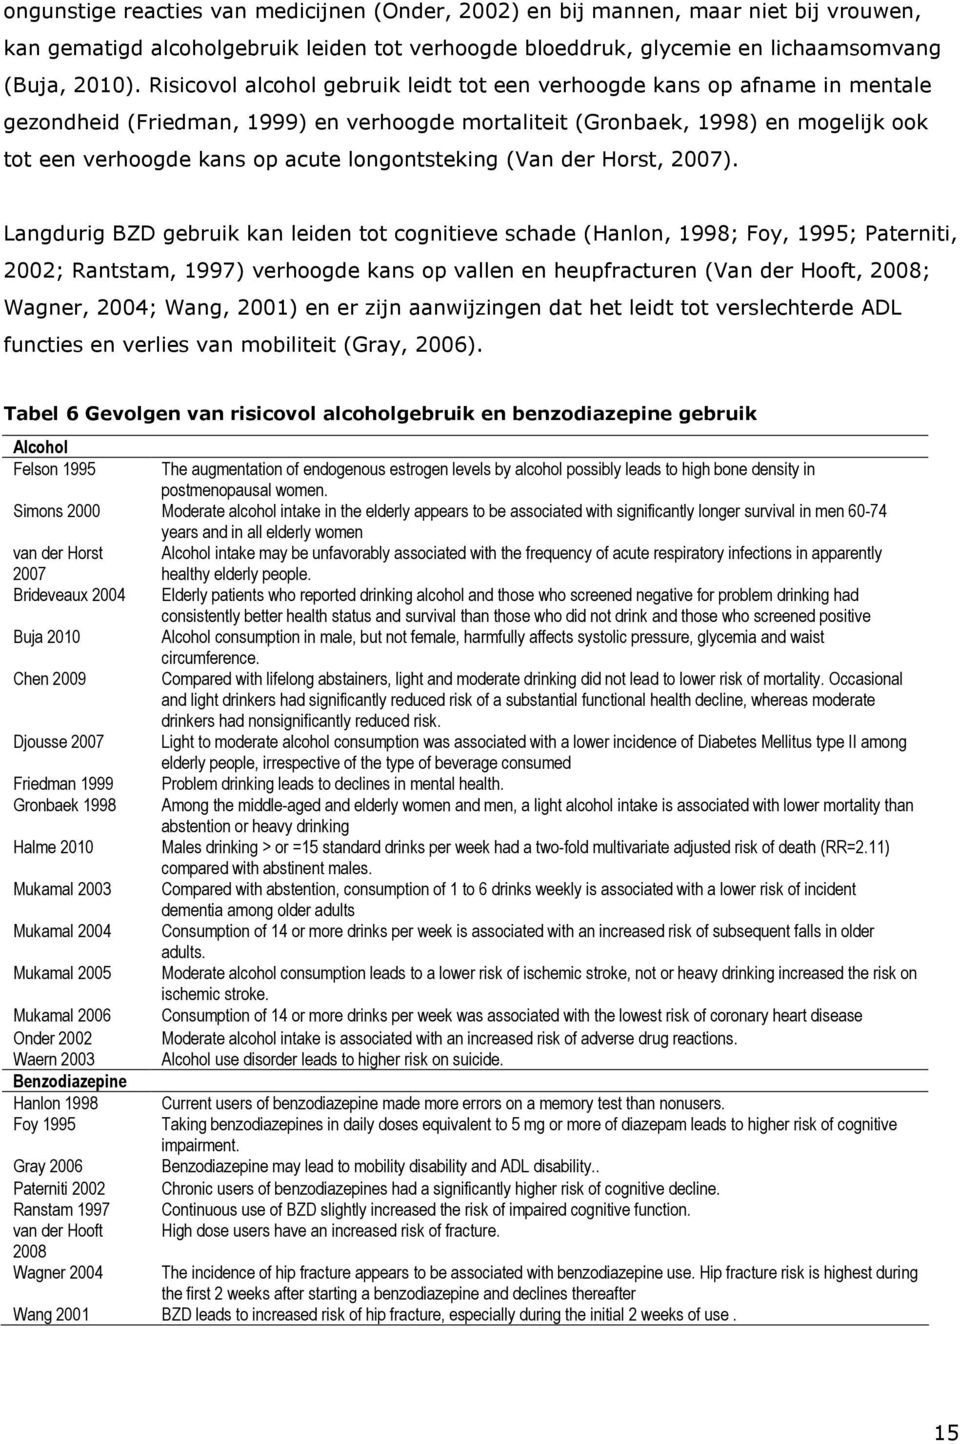 longontsteking (Van der Horst, 2007).